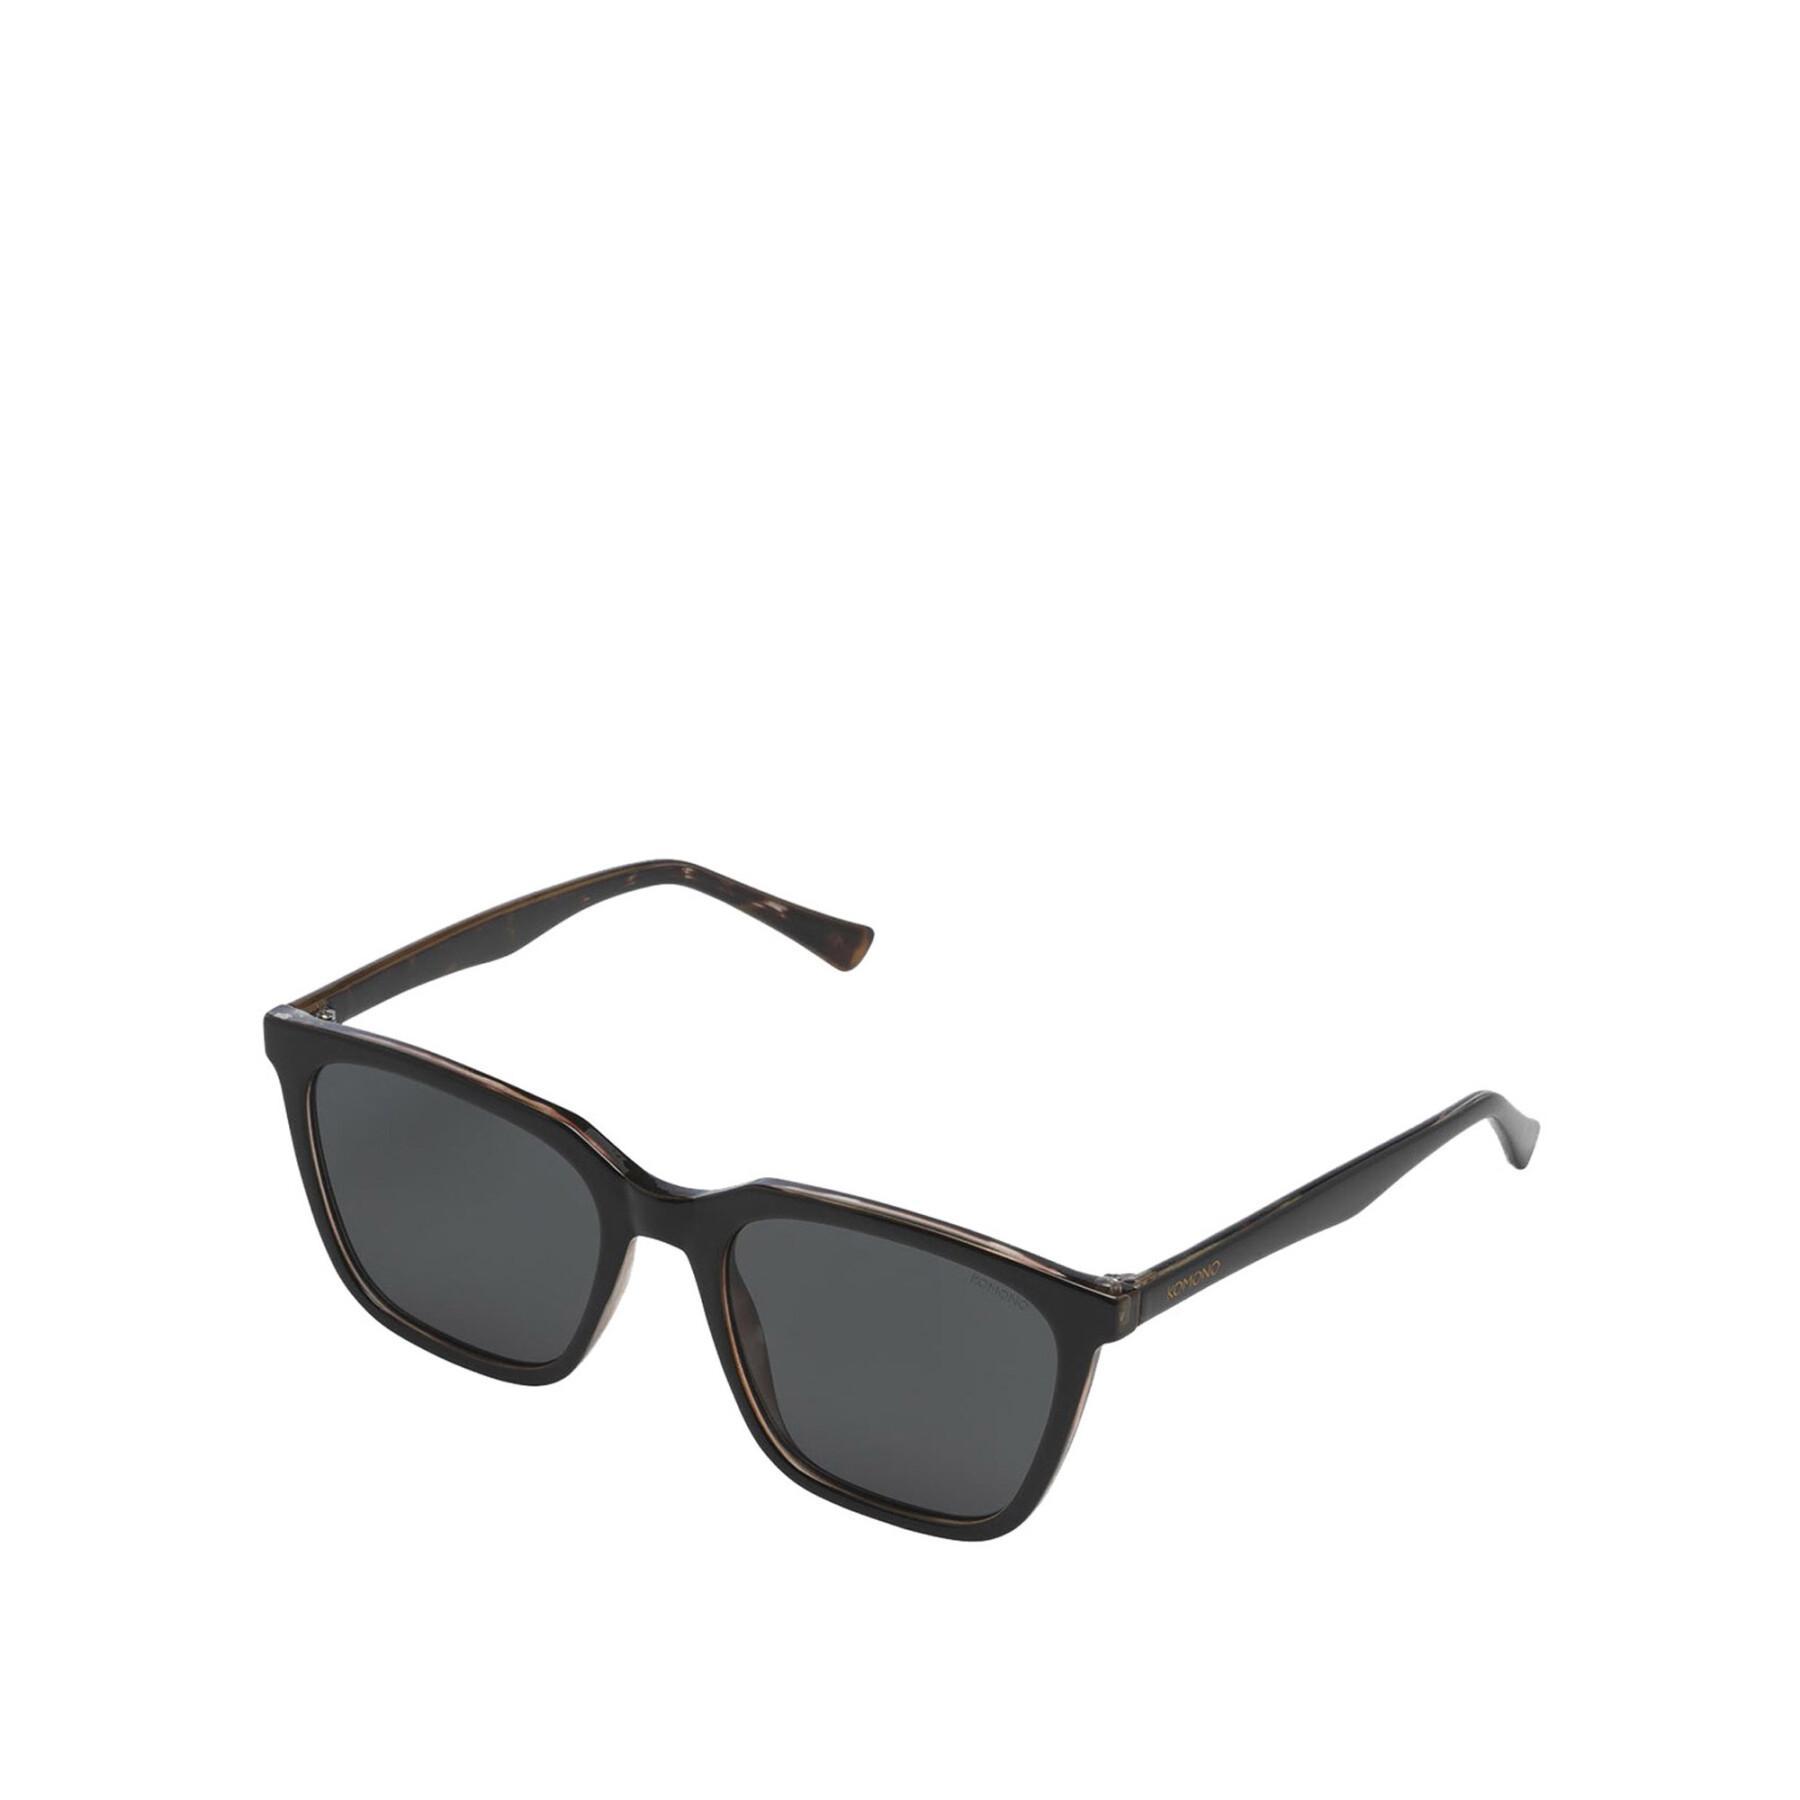 Sunglasses Komono Jay